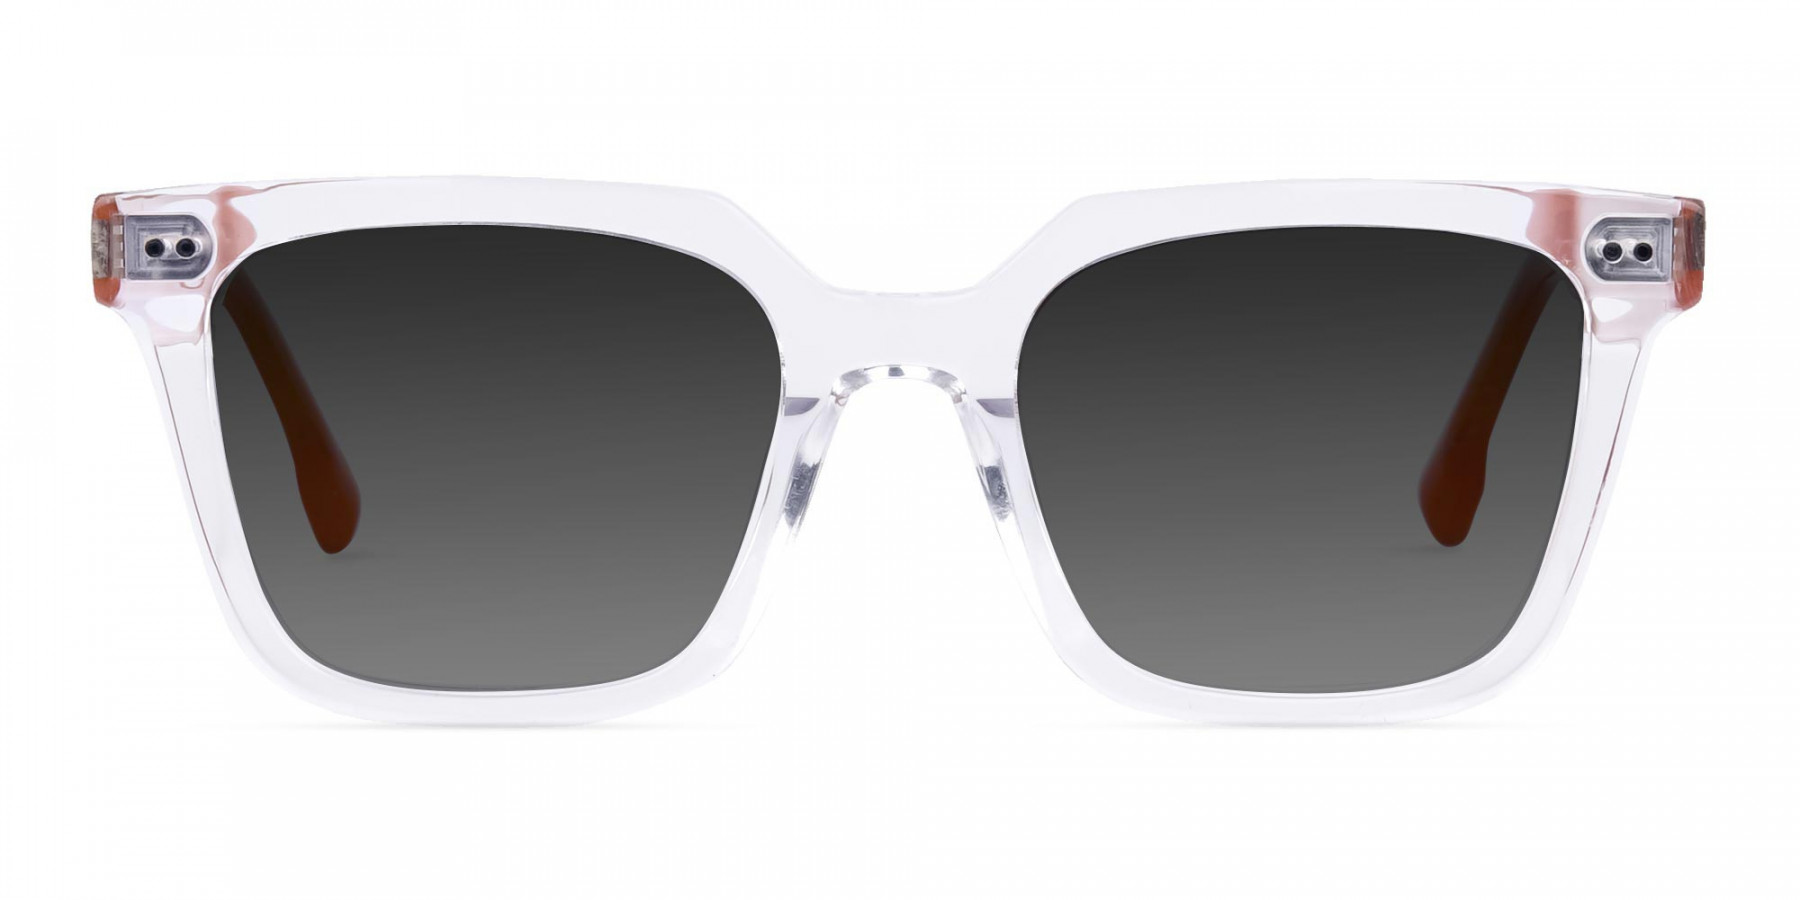 Clear-Wayfarer-Sunglasses-with-Grey-Tint-1